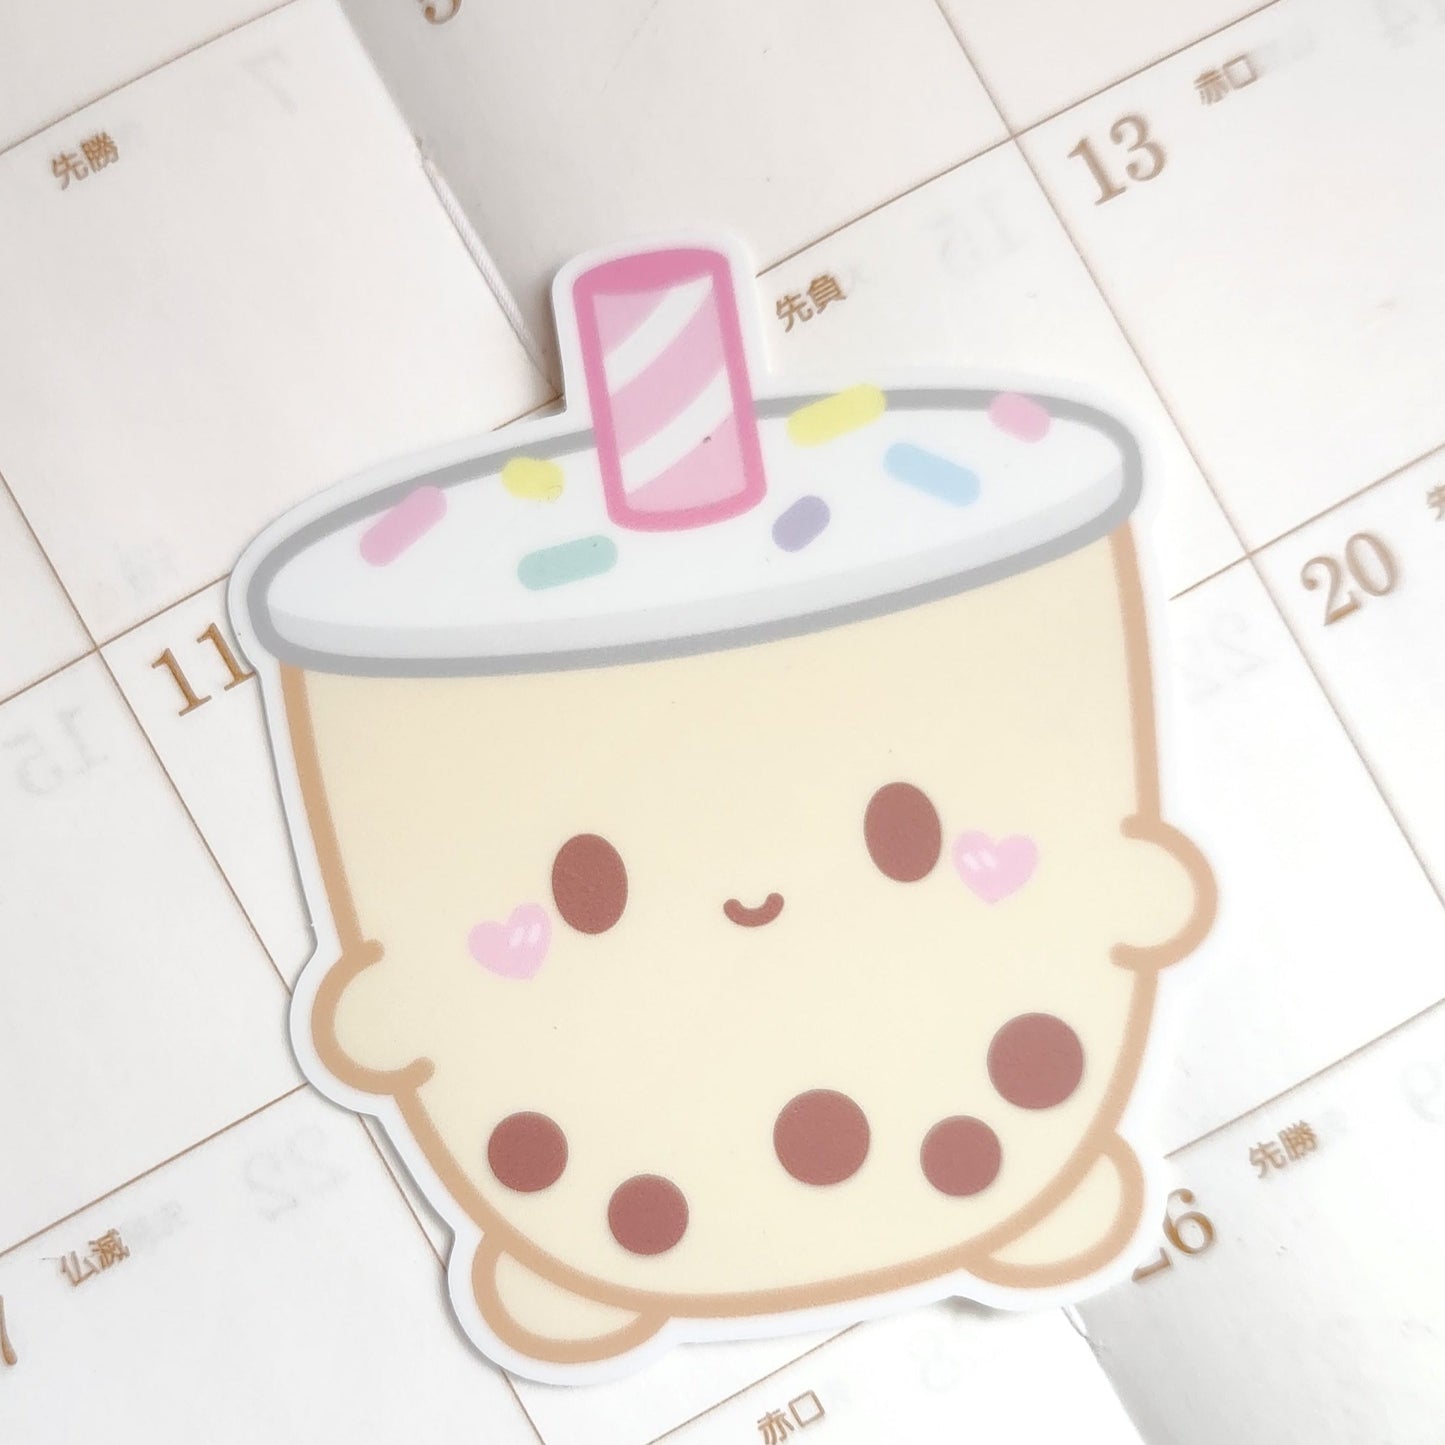 Cute Milky Bubble Tea Sticker